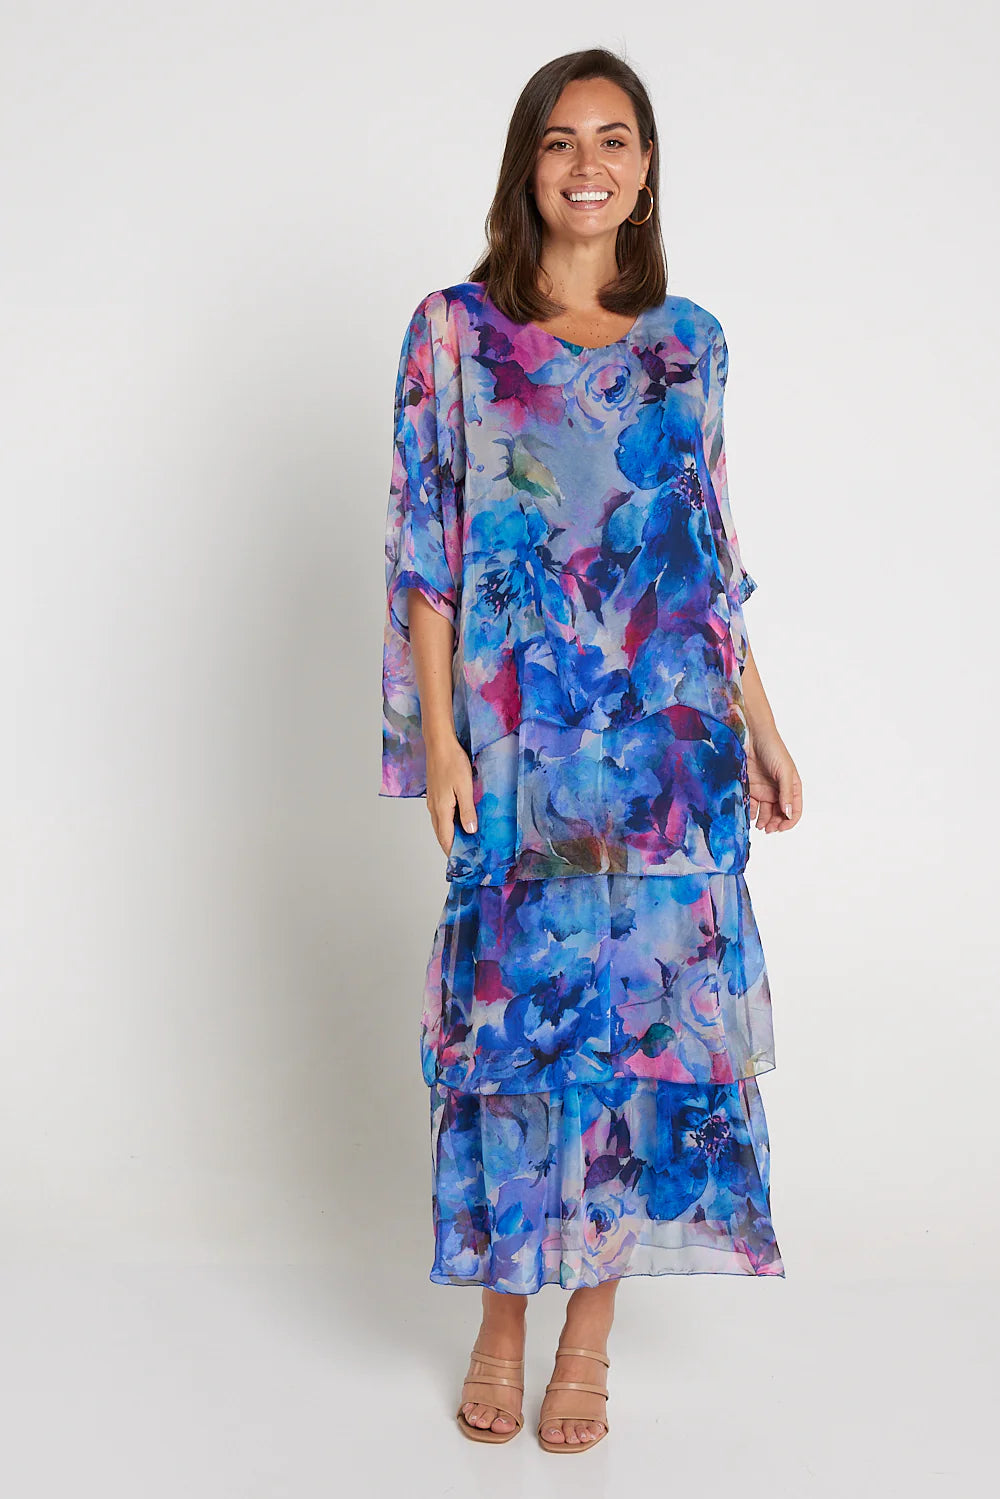 L’Amore Cobalt Blue Floral Silk Dress